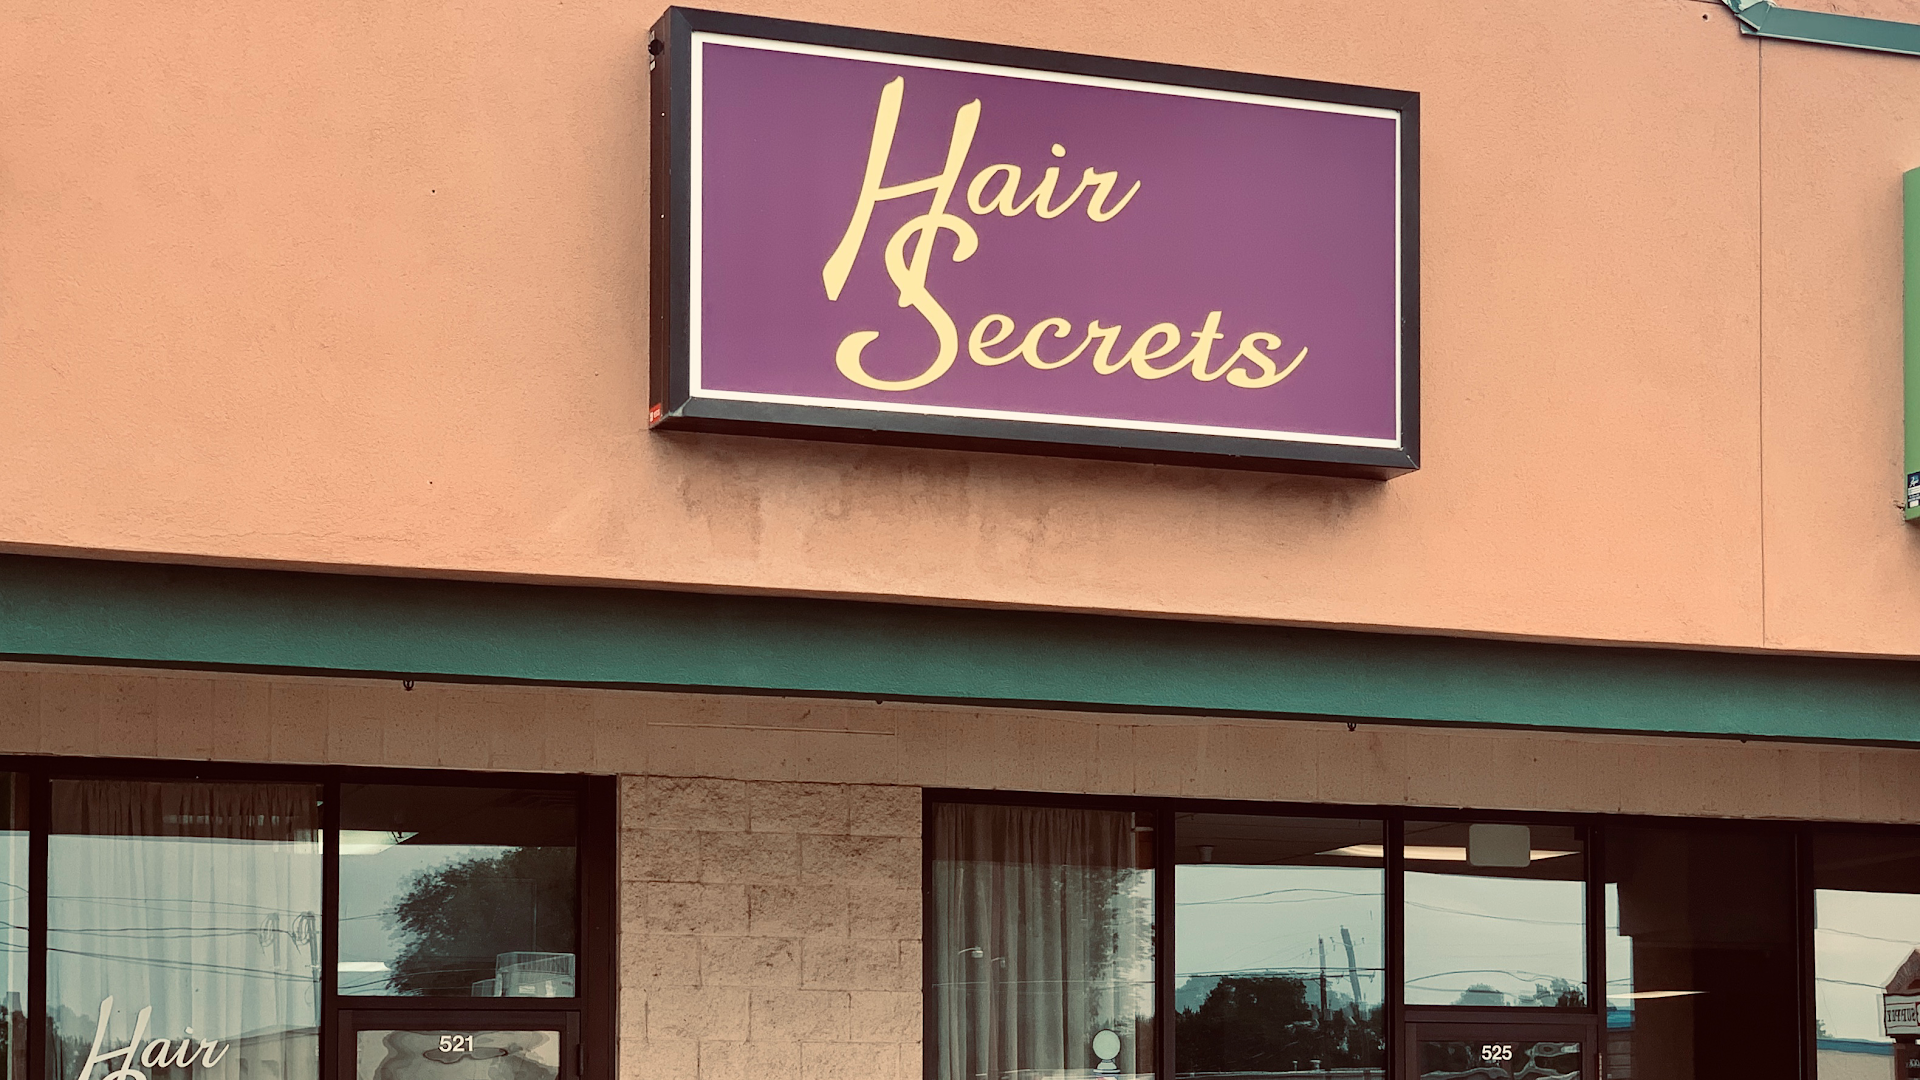 Hair Secrets